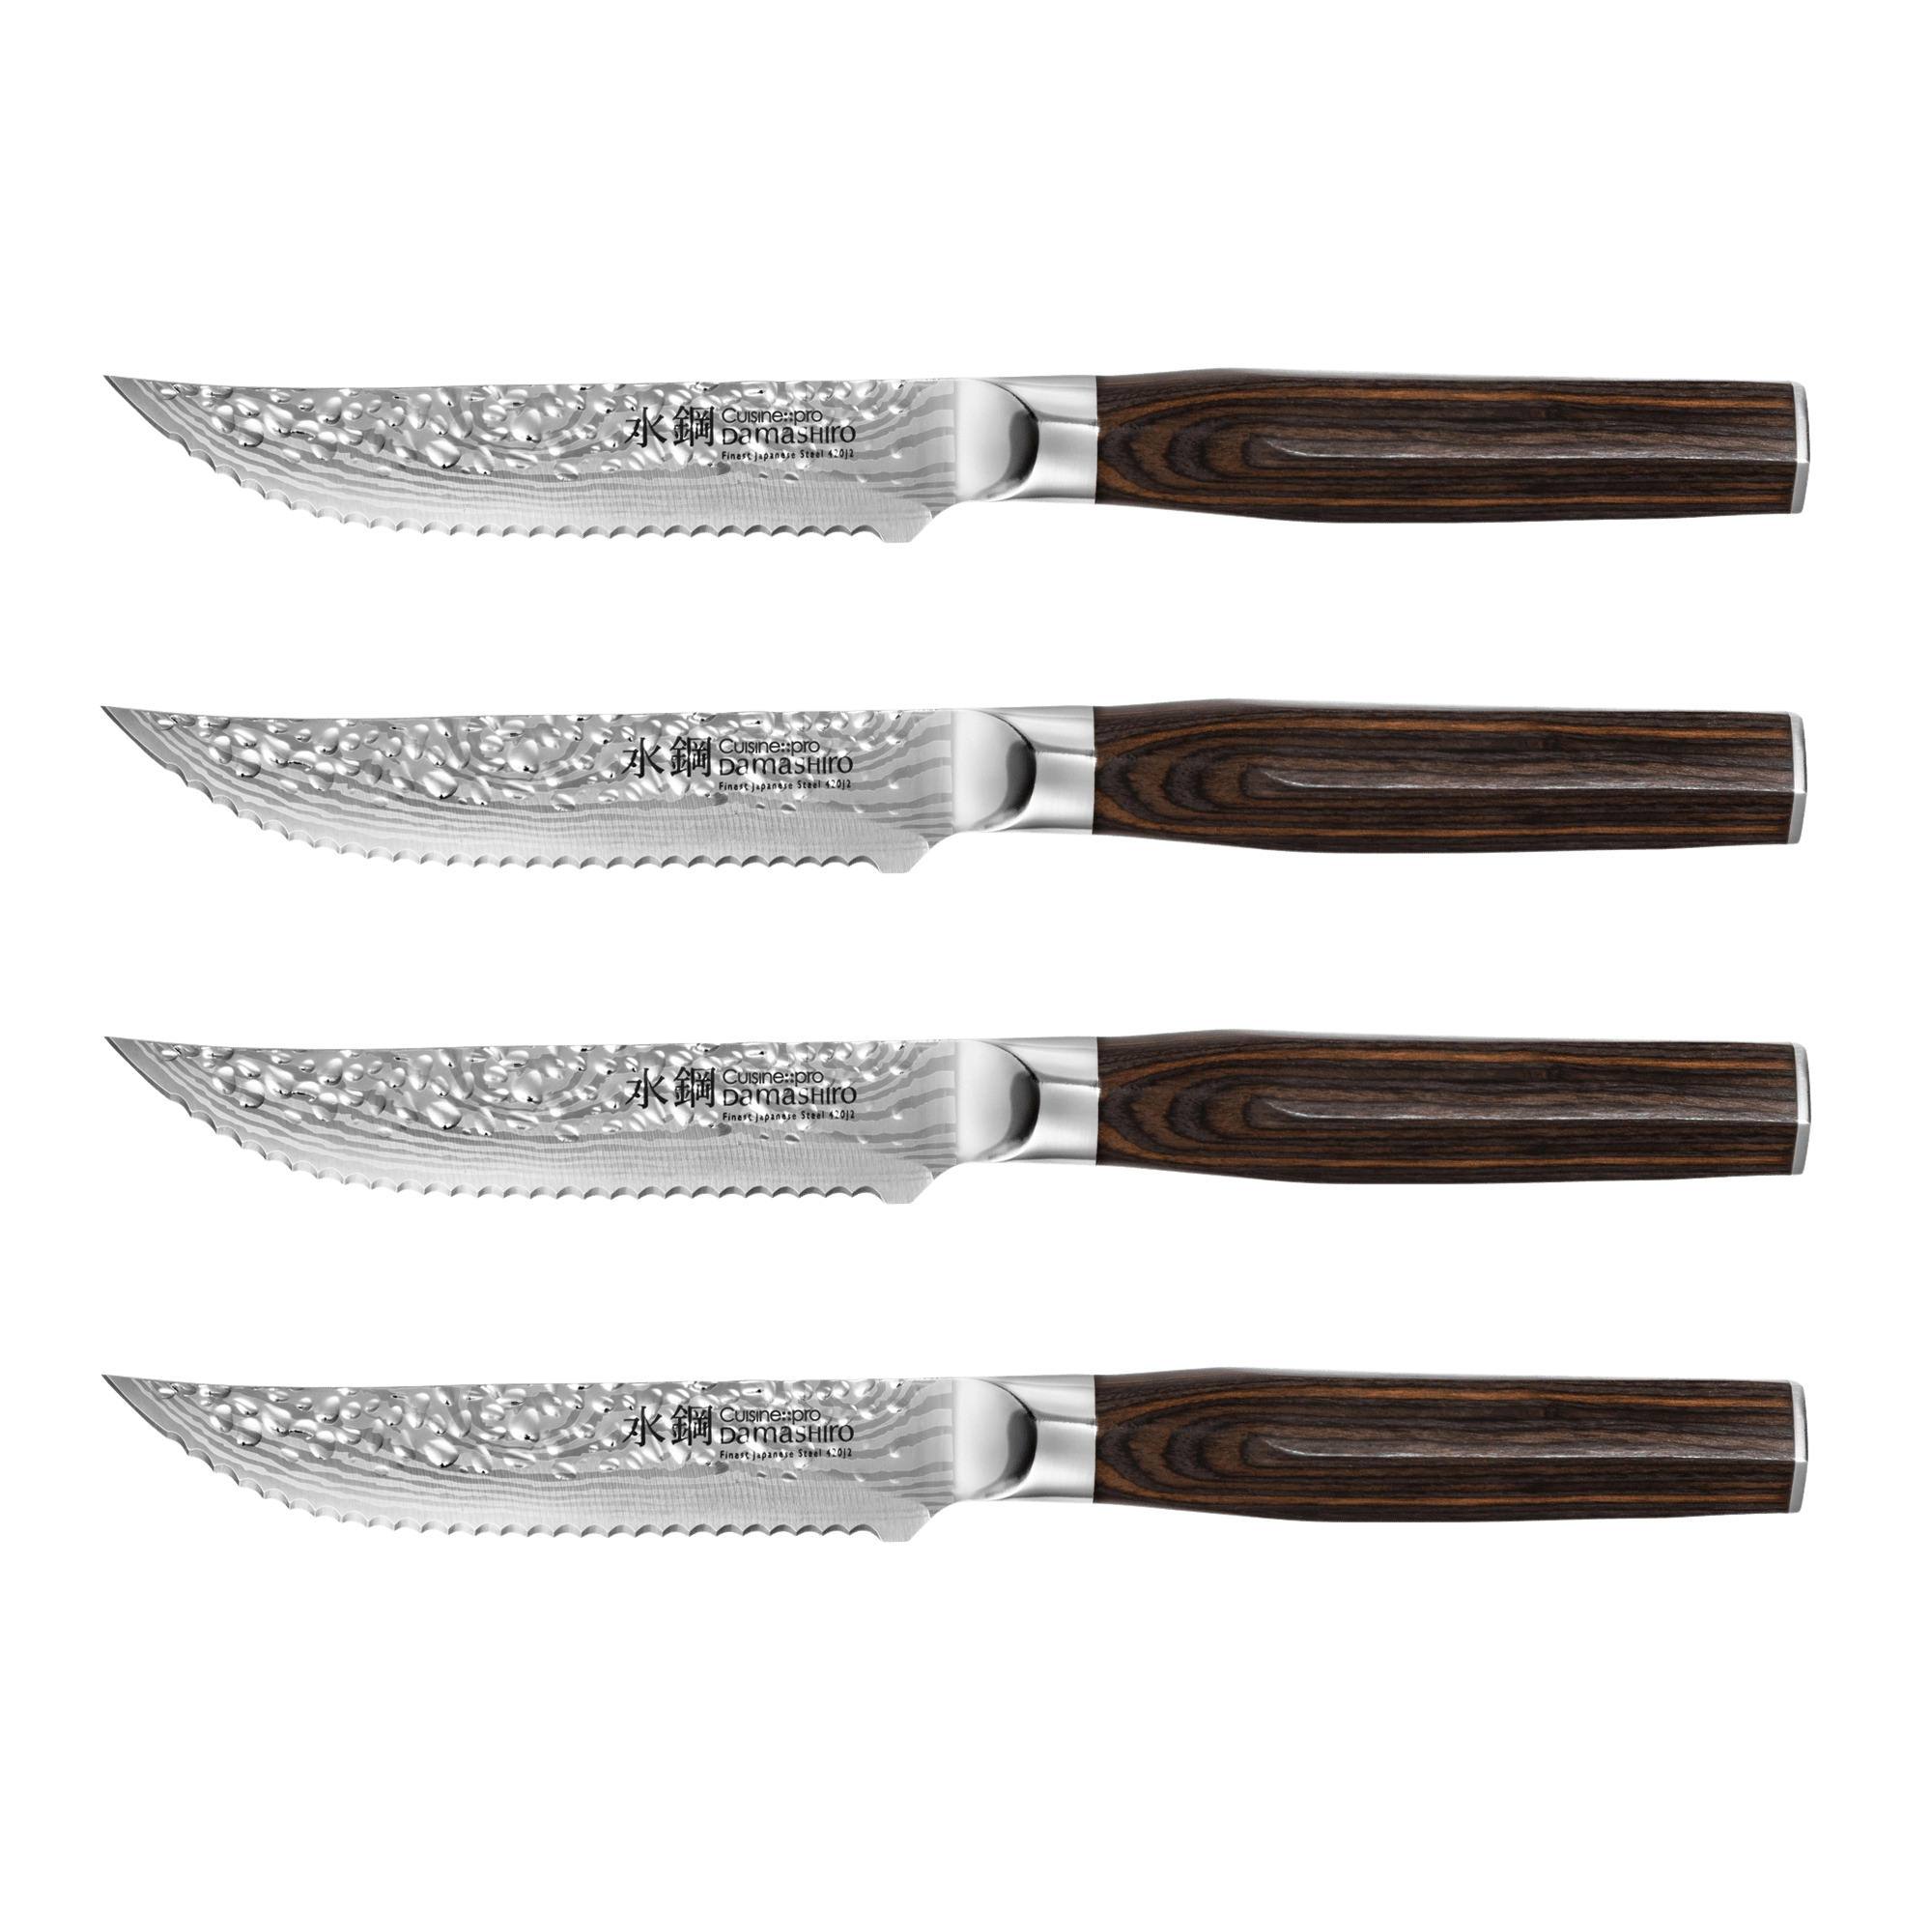 Kessaku 5 Steak Knife Set - 4 Piece - Dynasty Series – KessakuUSA